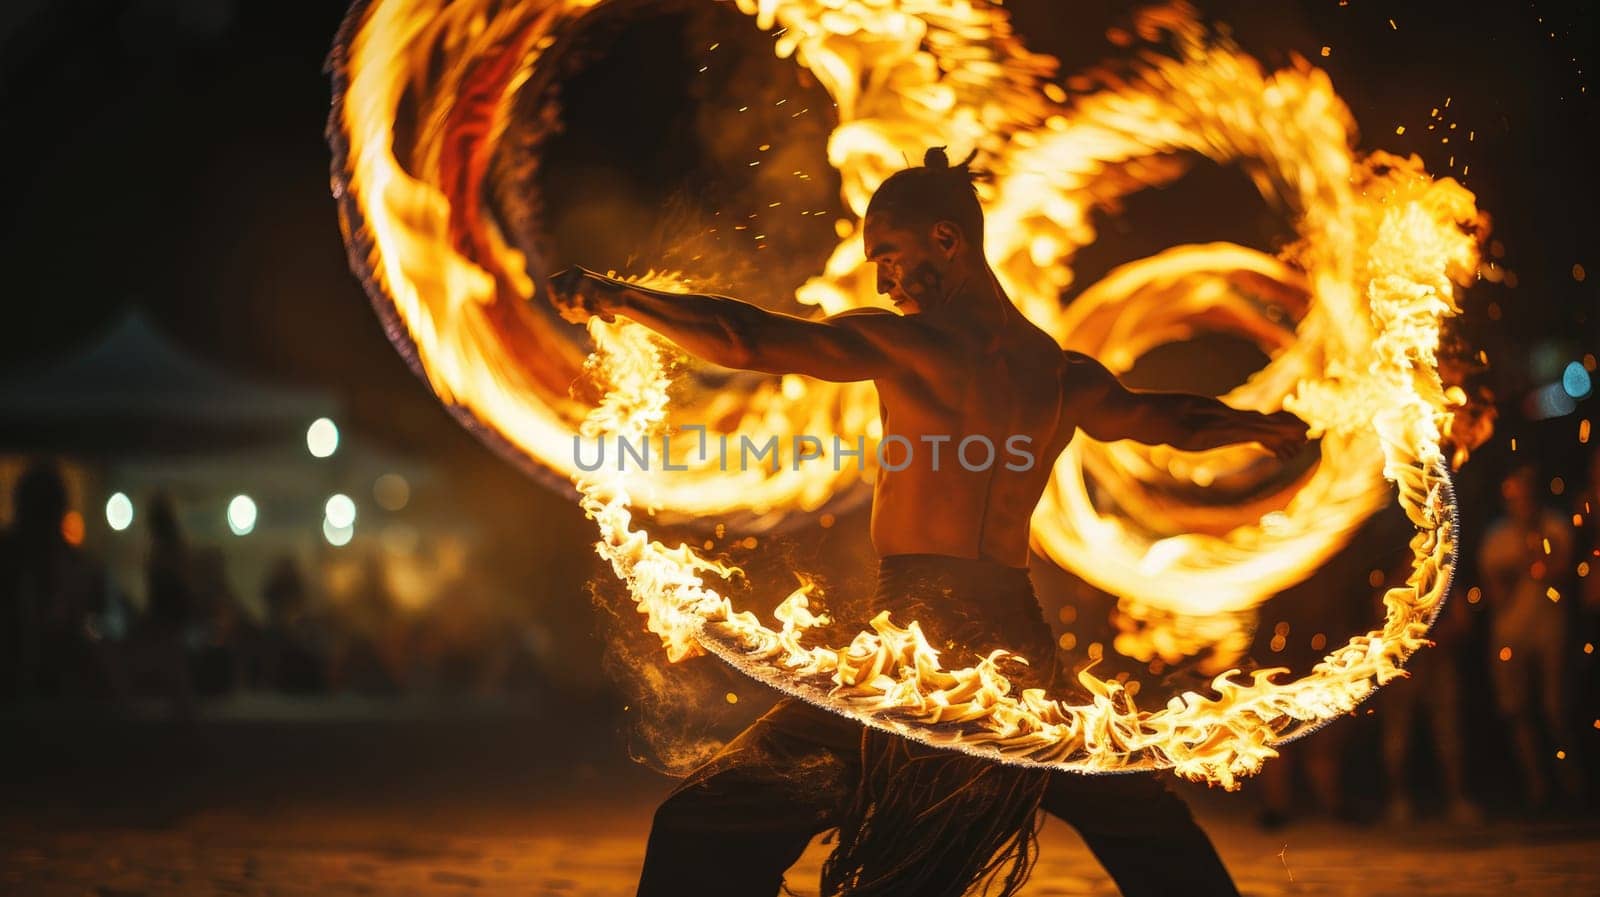 A fire dancer twirls gracefully, flames swirling around their body